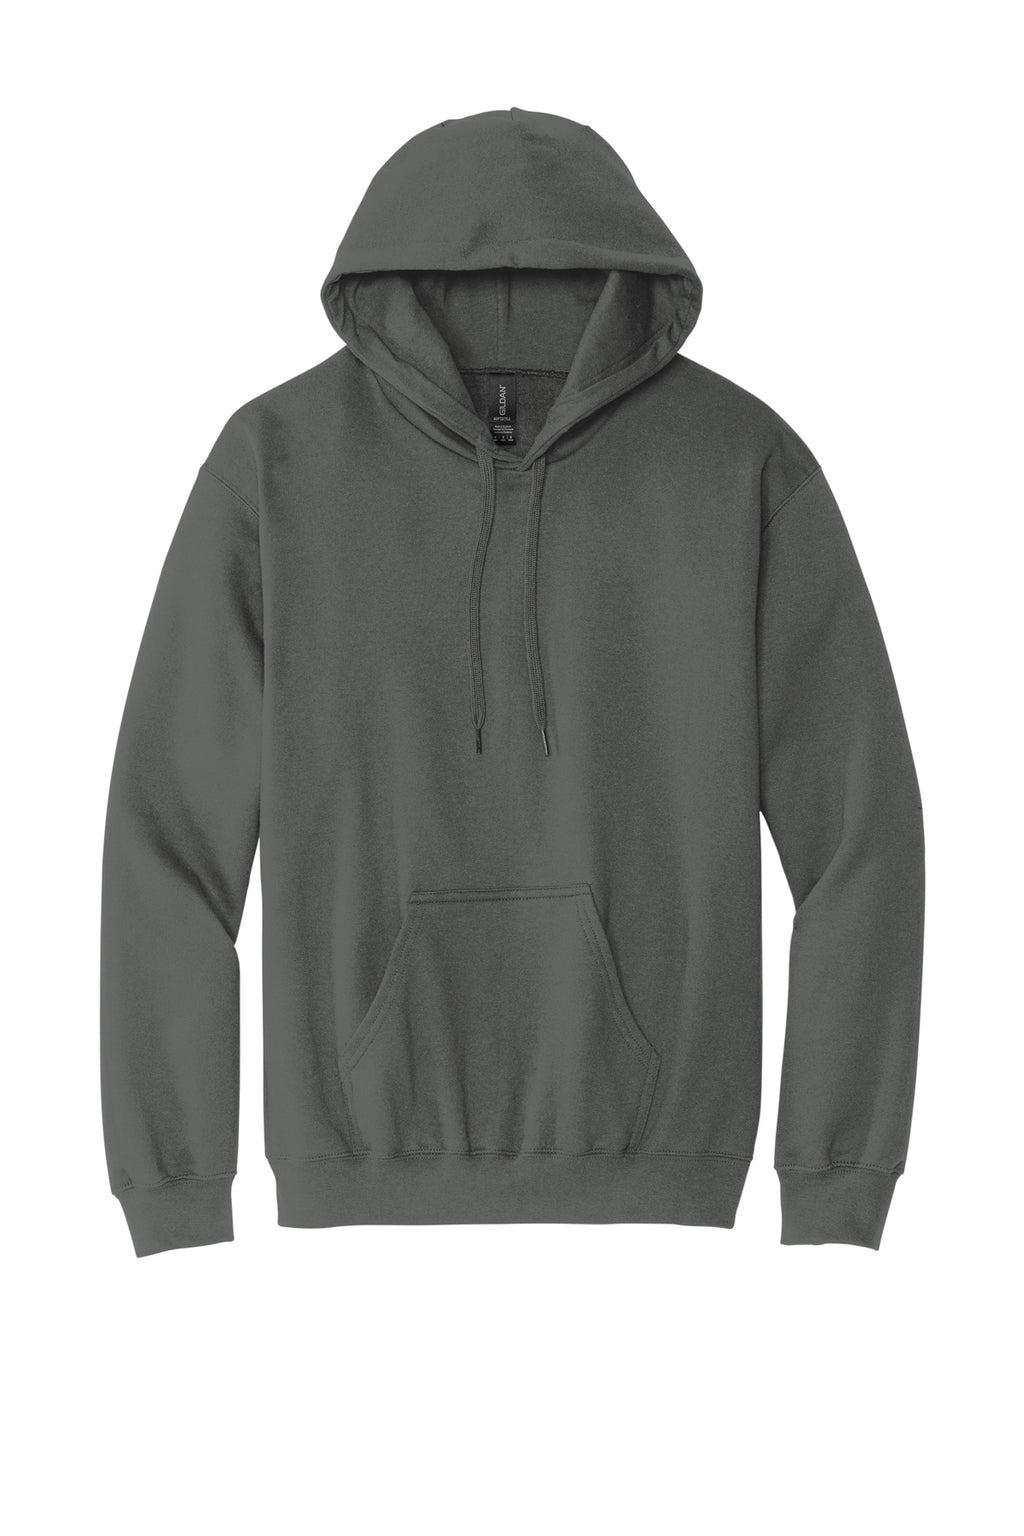 Gildan Soft touch Hooded Sweatshirt Mens/Unisex Hoodies Dark Grey